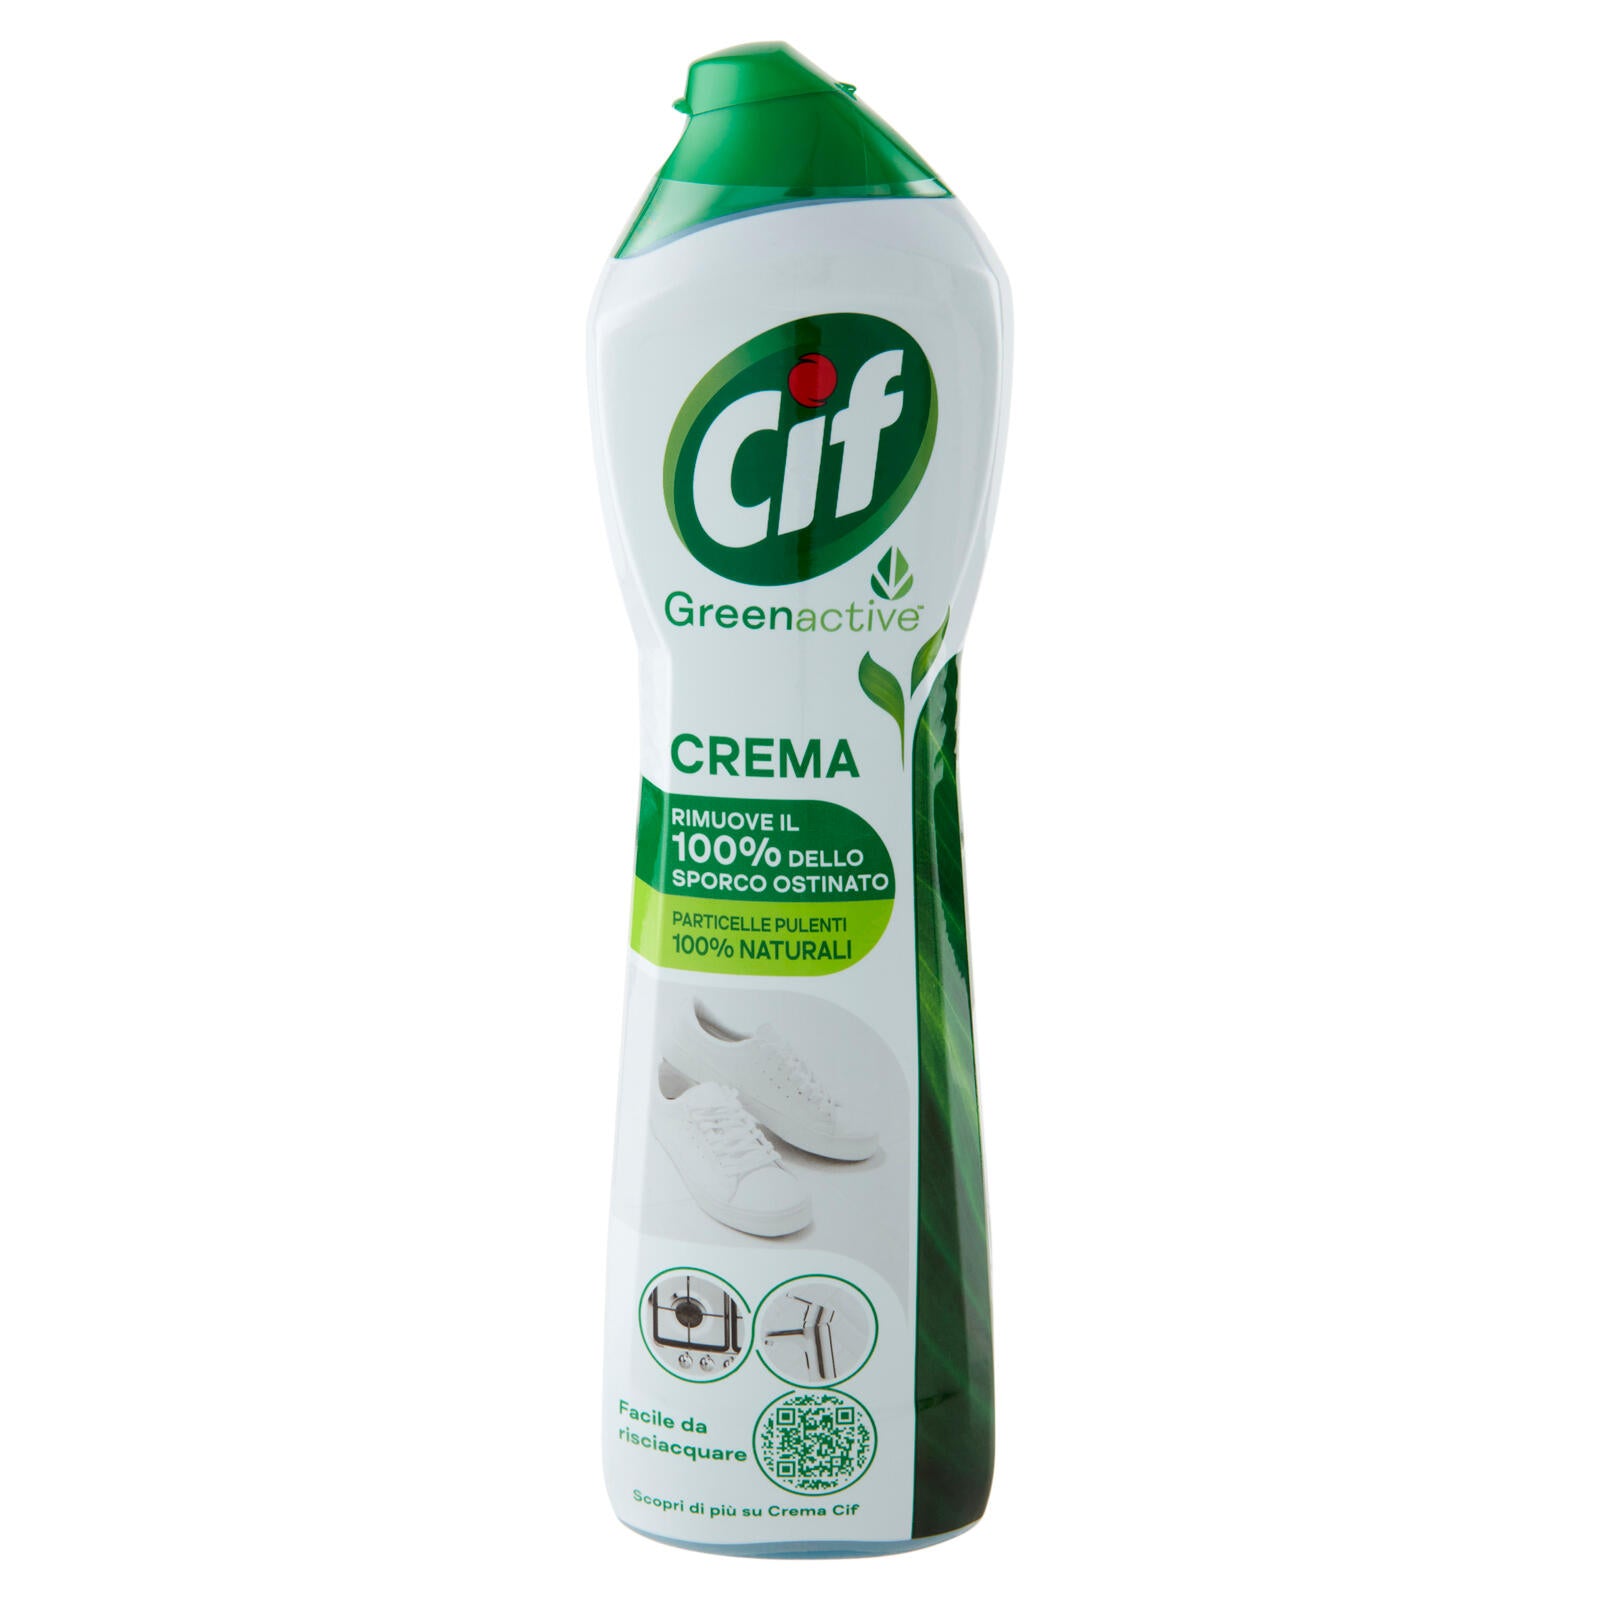 Cif Greenactive Crema 500 ml